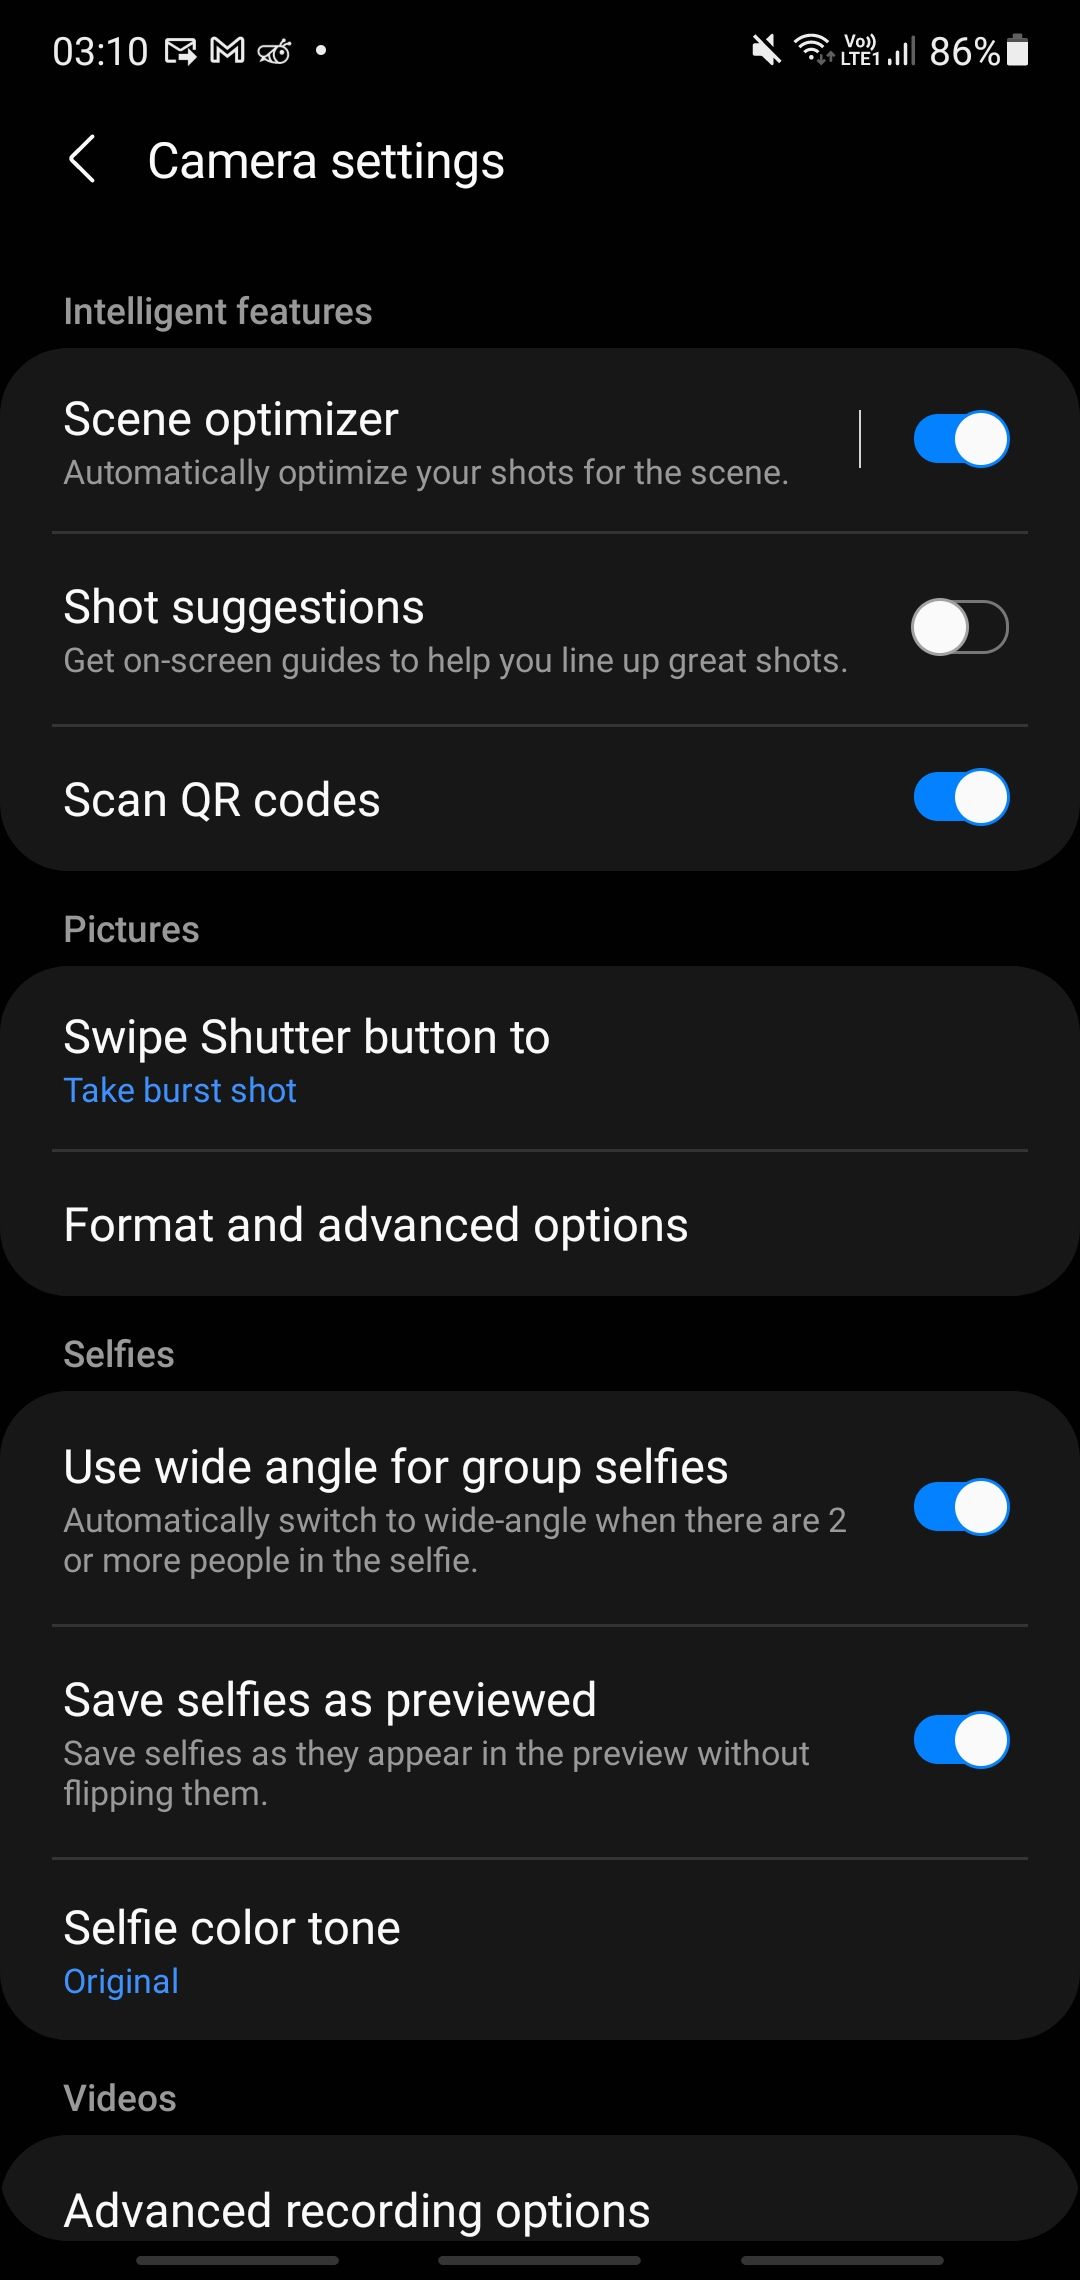 Samsung Galaxy camera app settings